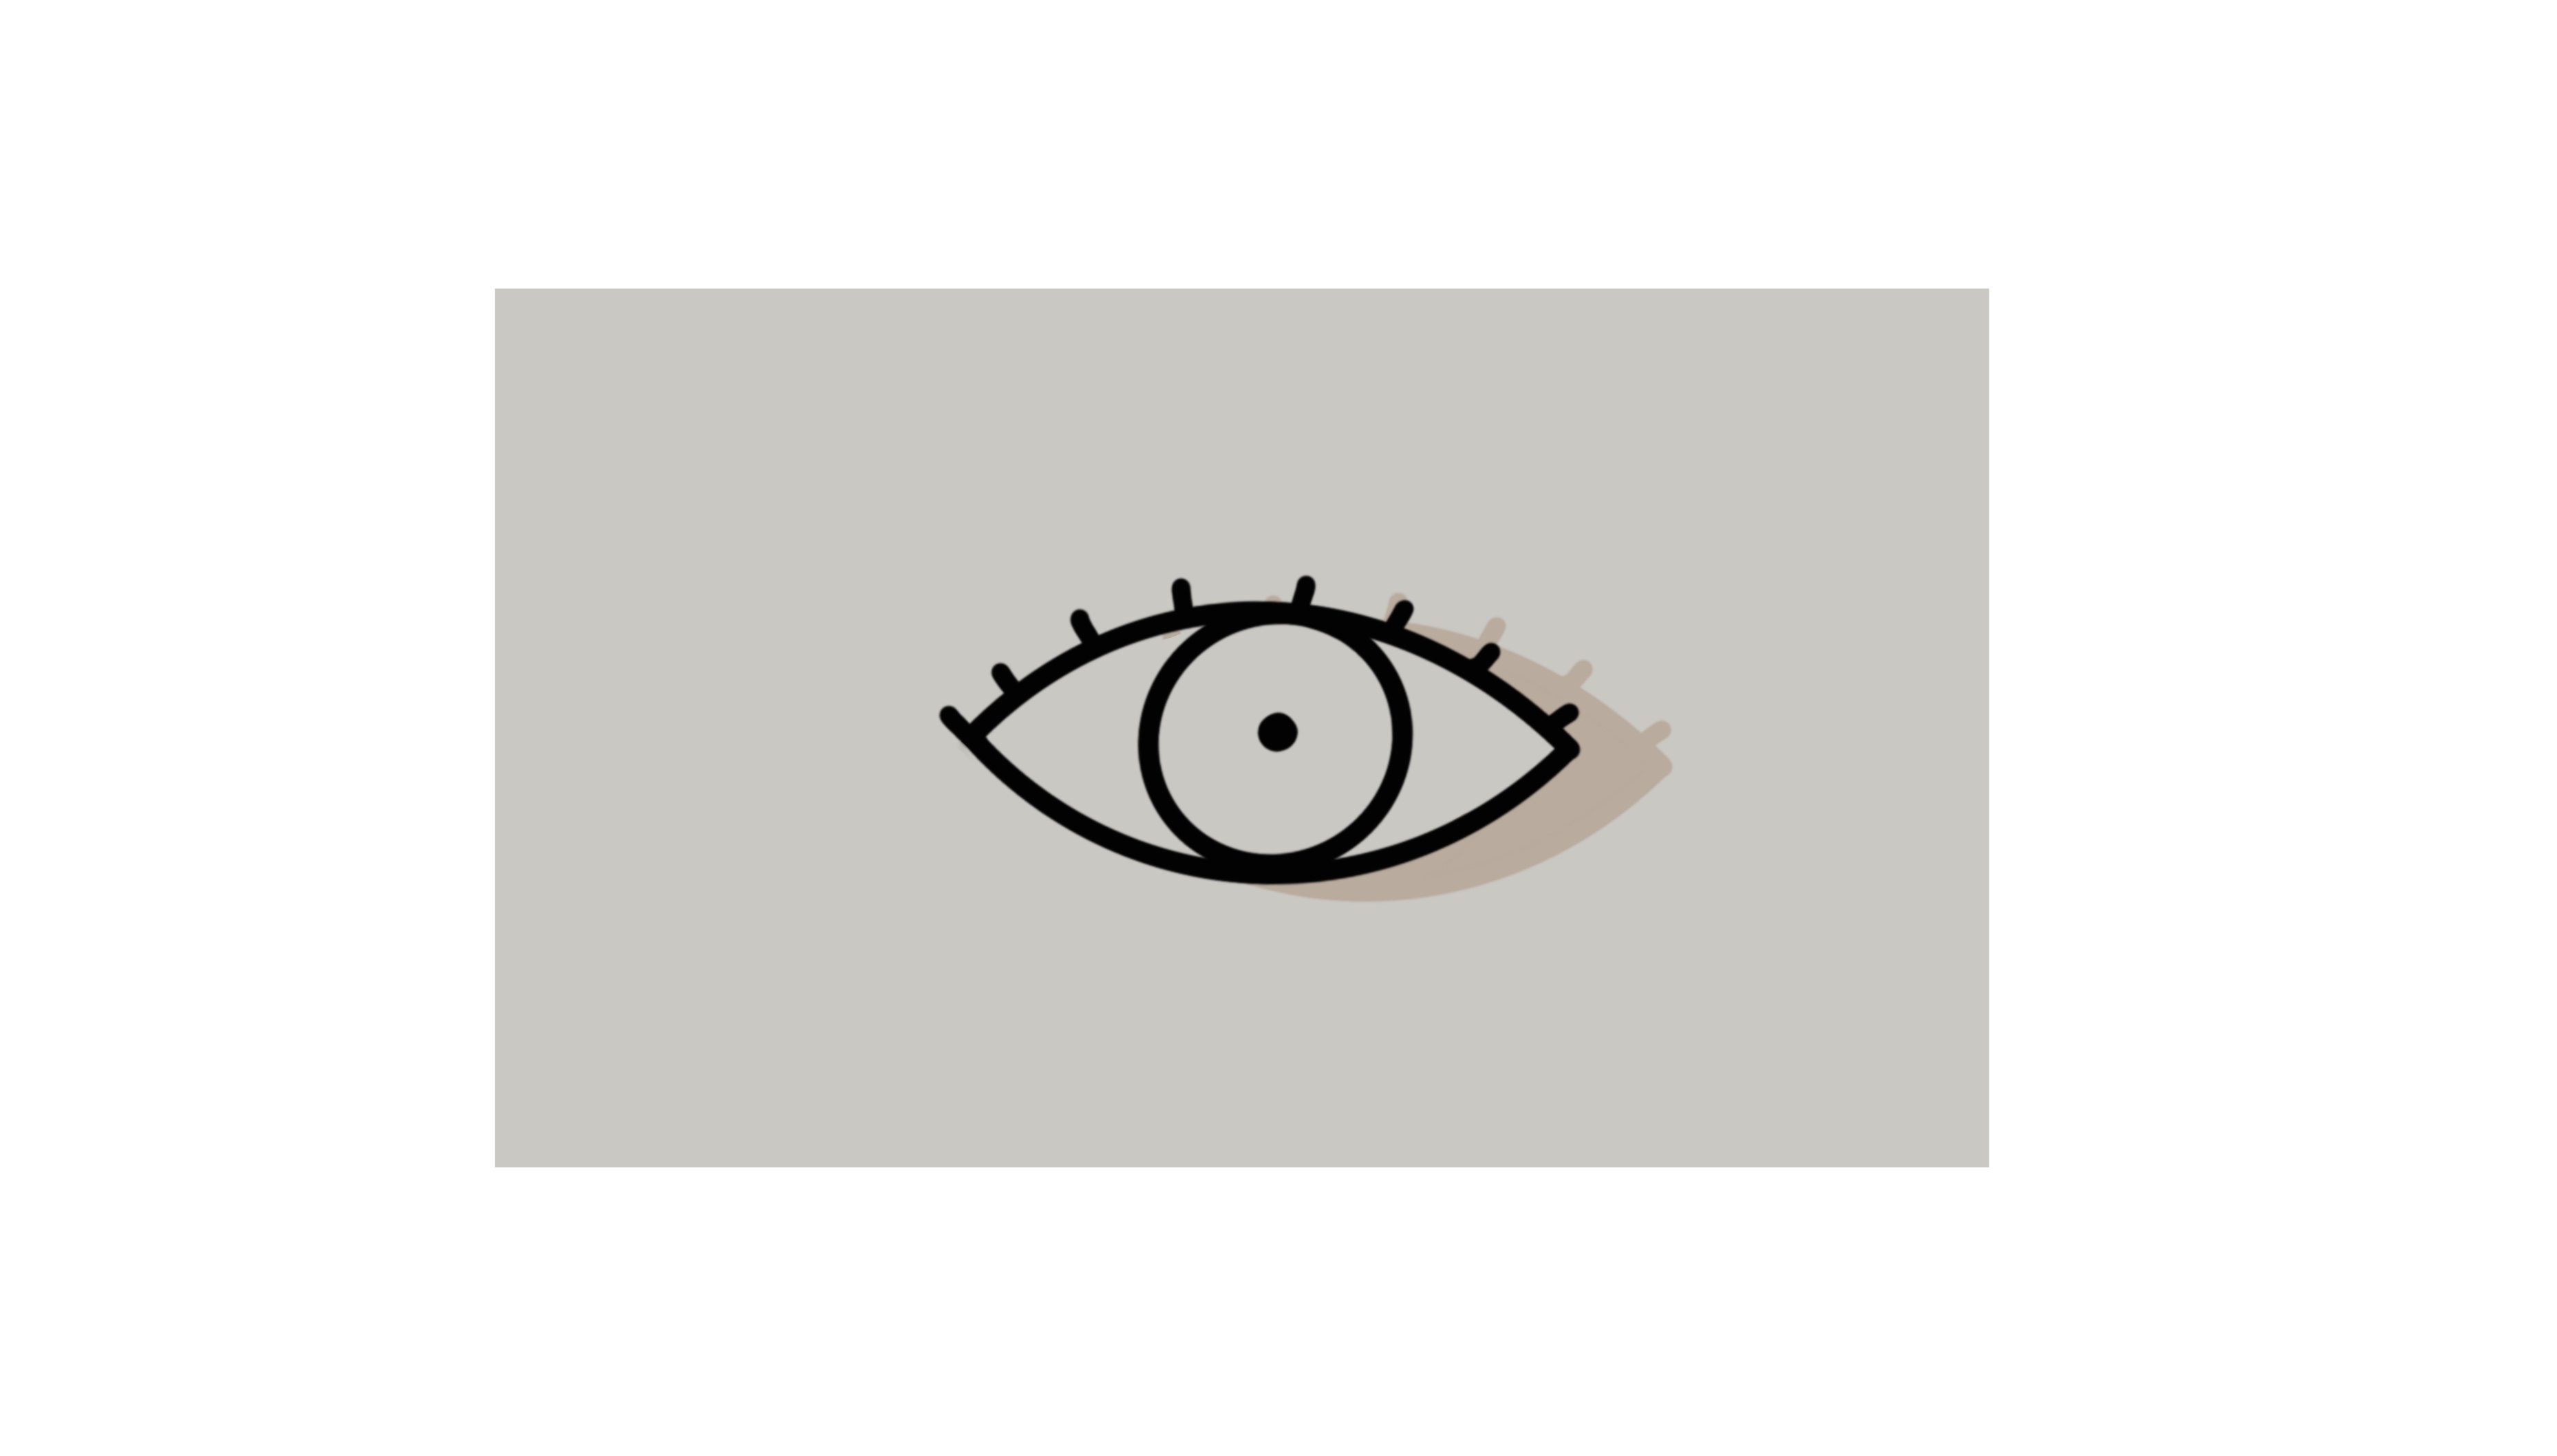 Icon depicting an eye